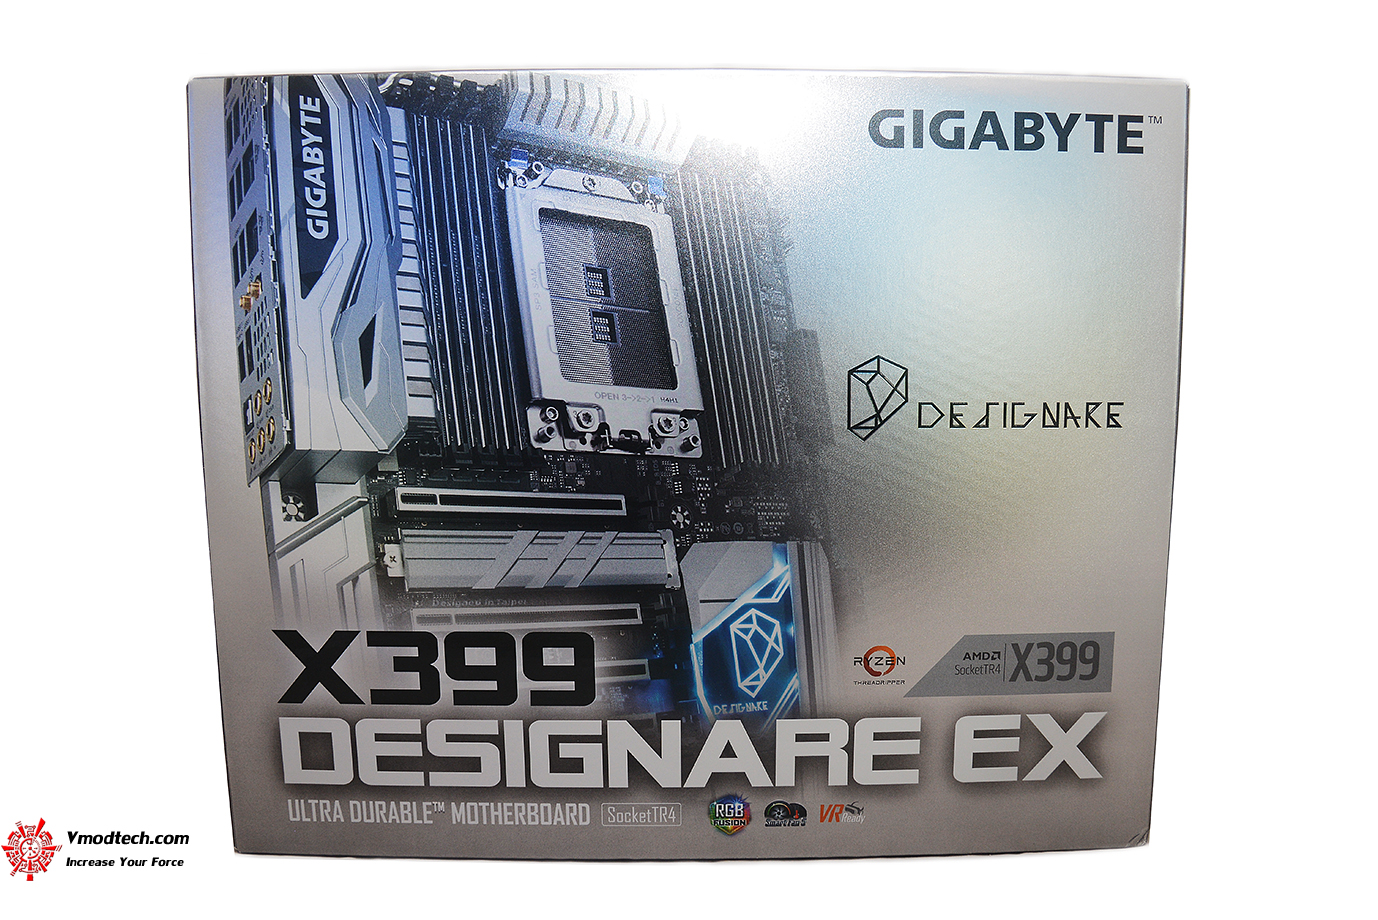 dsc 5534 GIGABYTE X399 DESIGNARE EX REVIEW